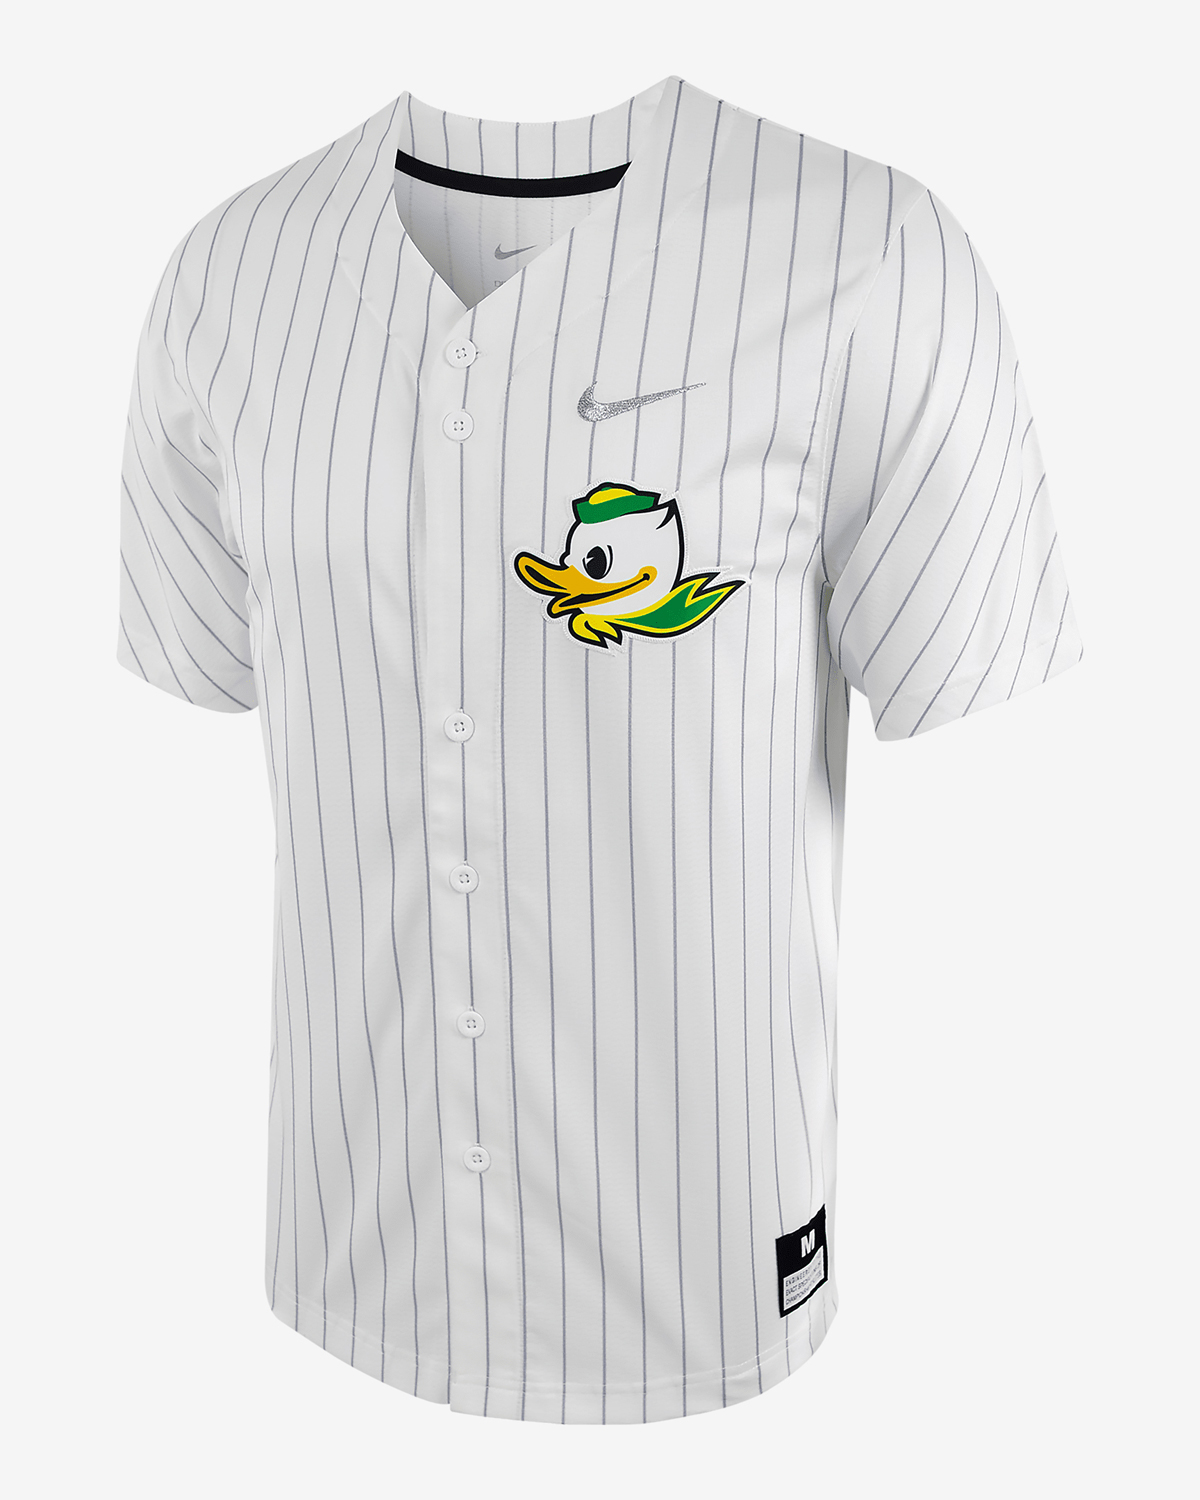 Nike-Dunk-Low-Oregon-Ducks-Baseball-Jersey